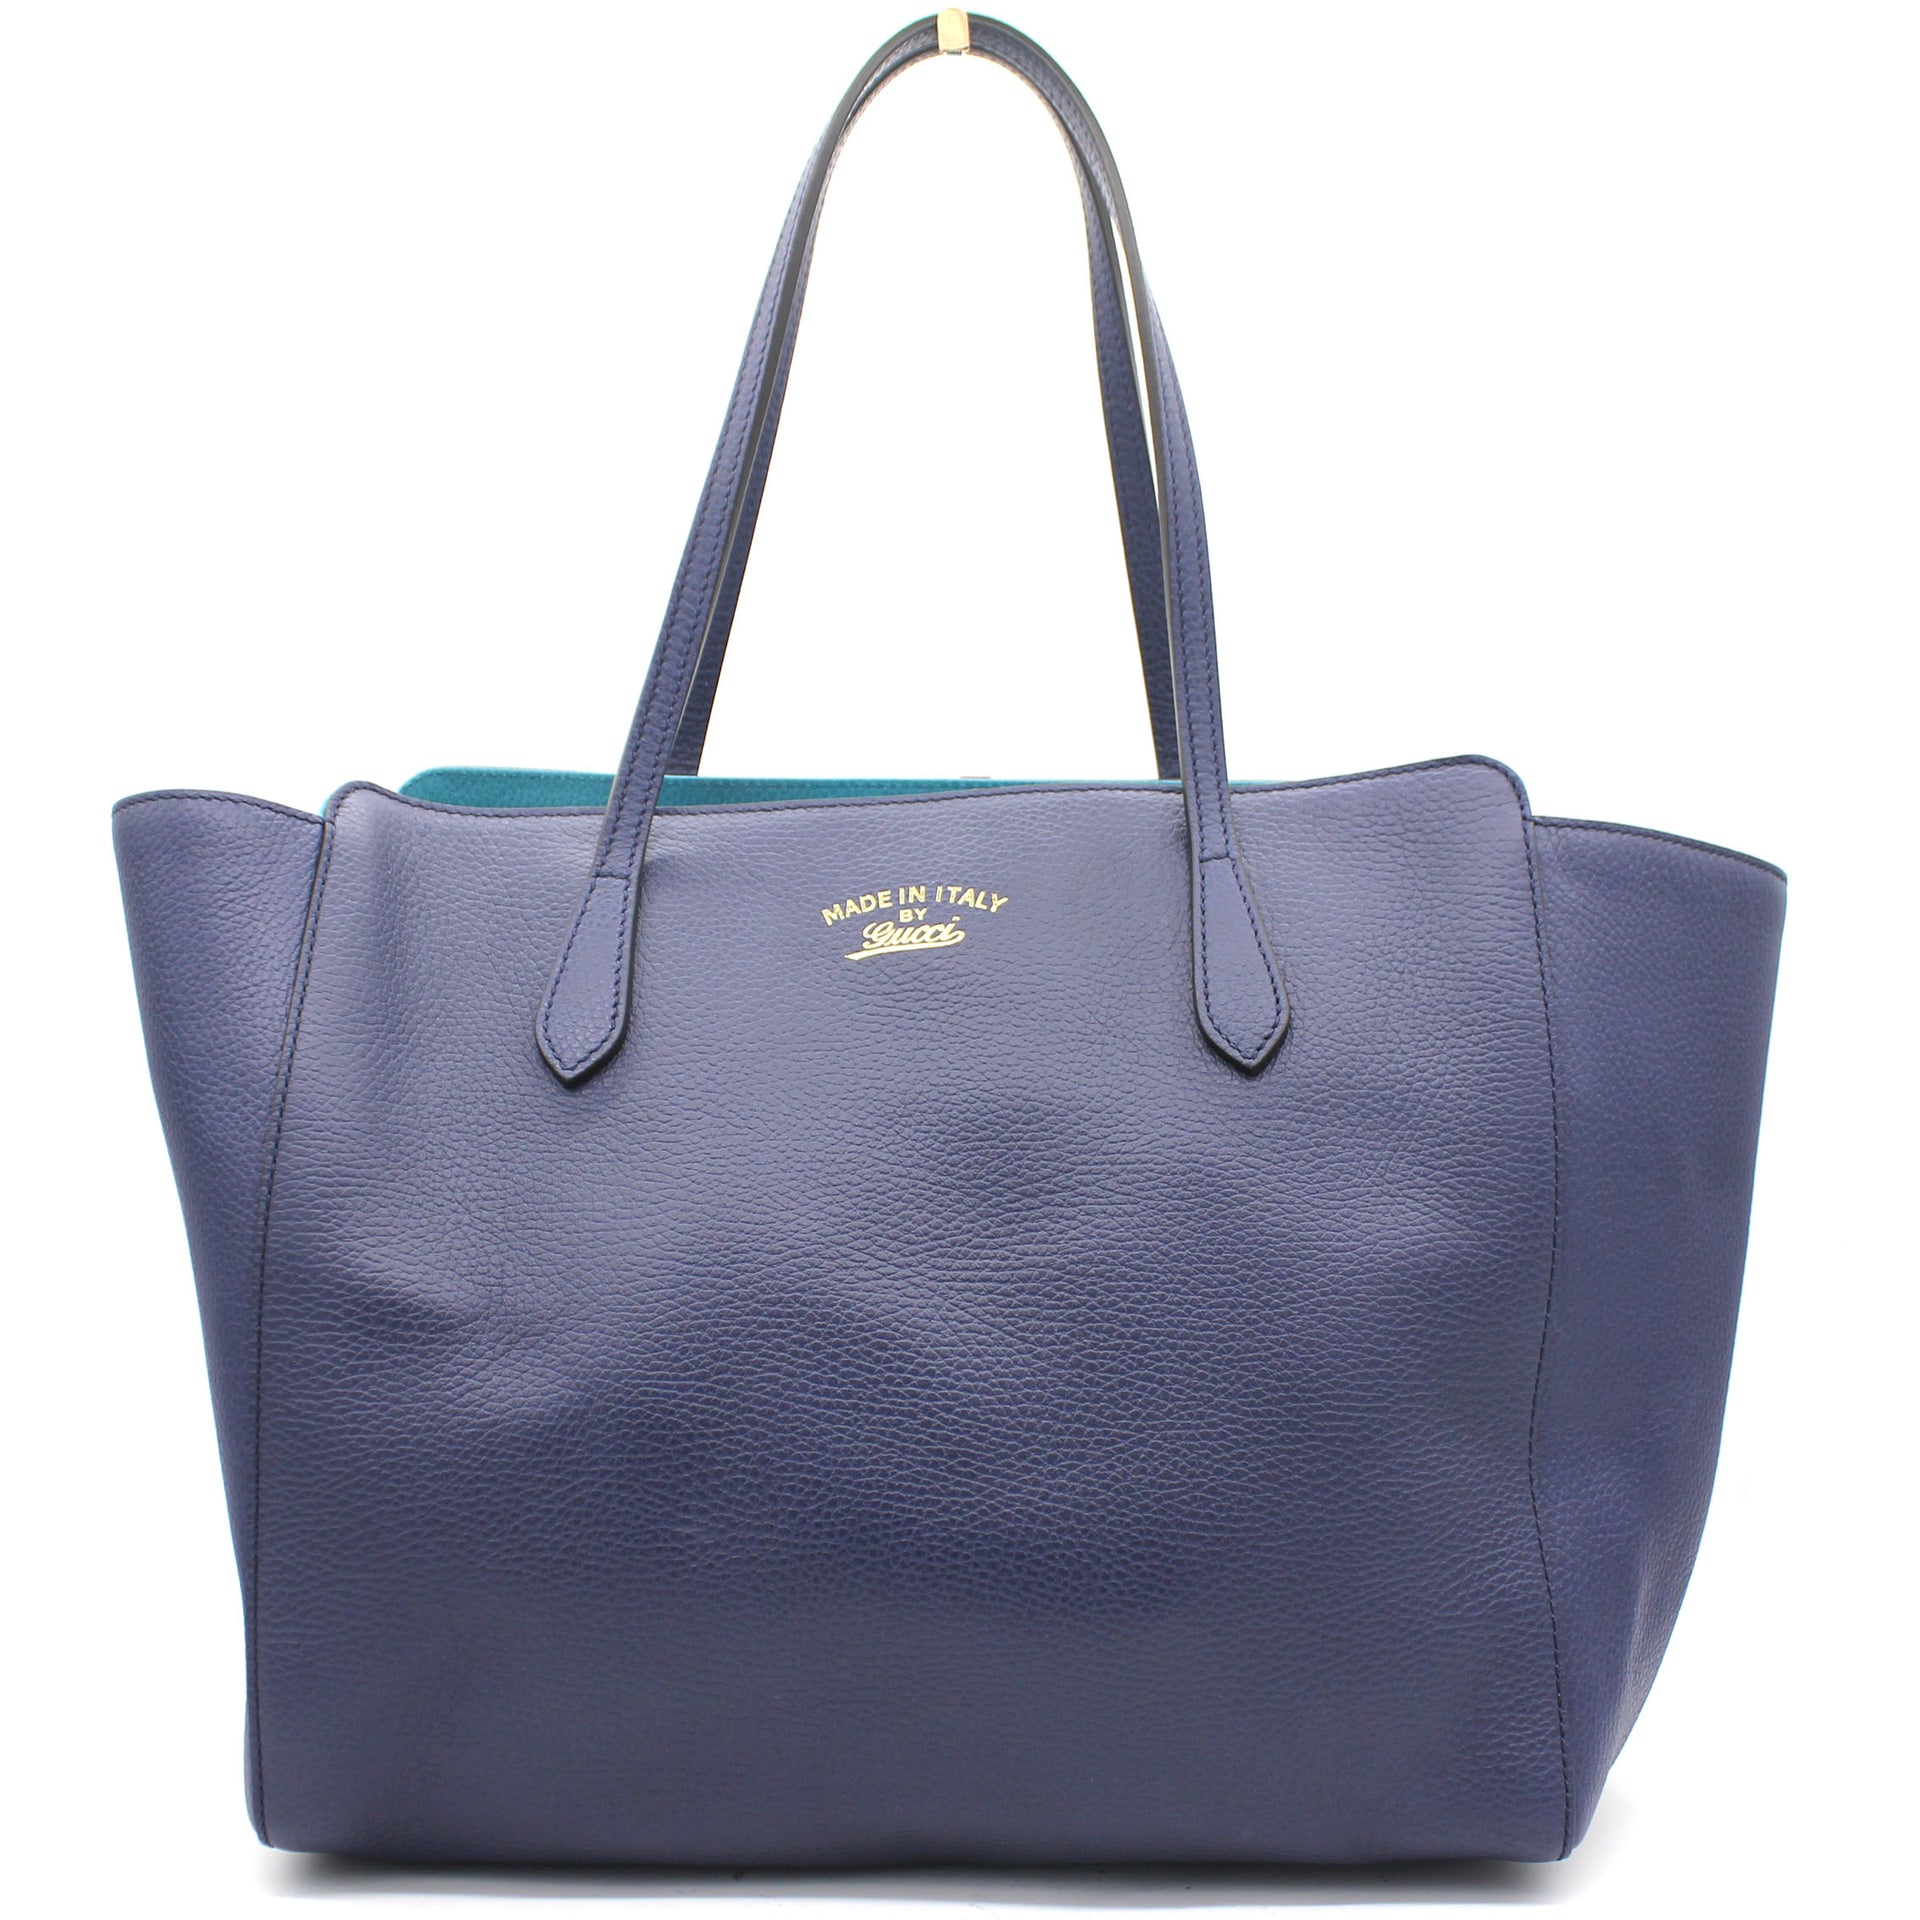 Gucci Tote Bag Navy Blue